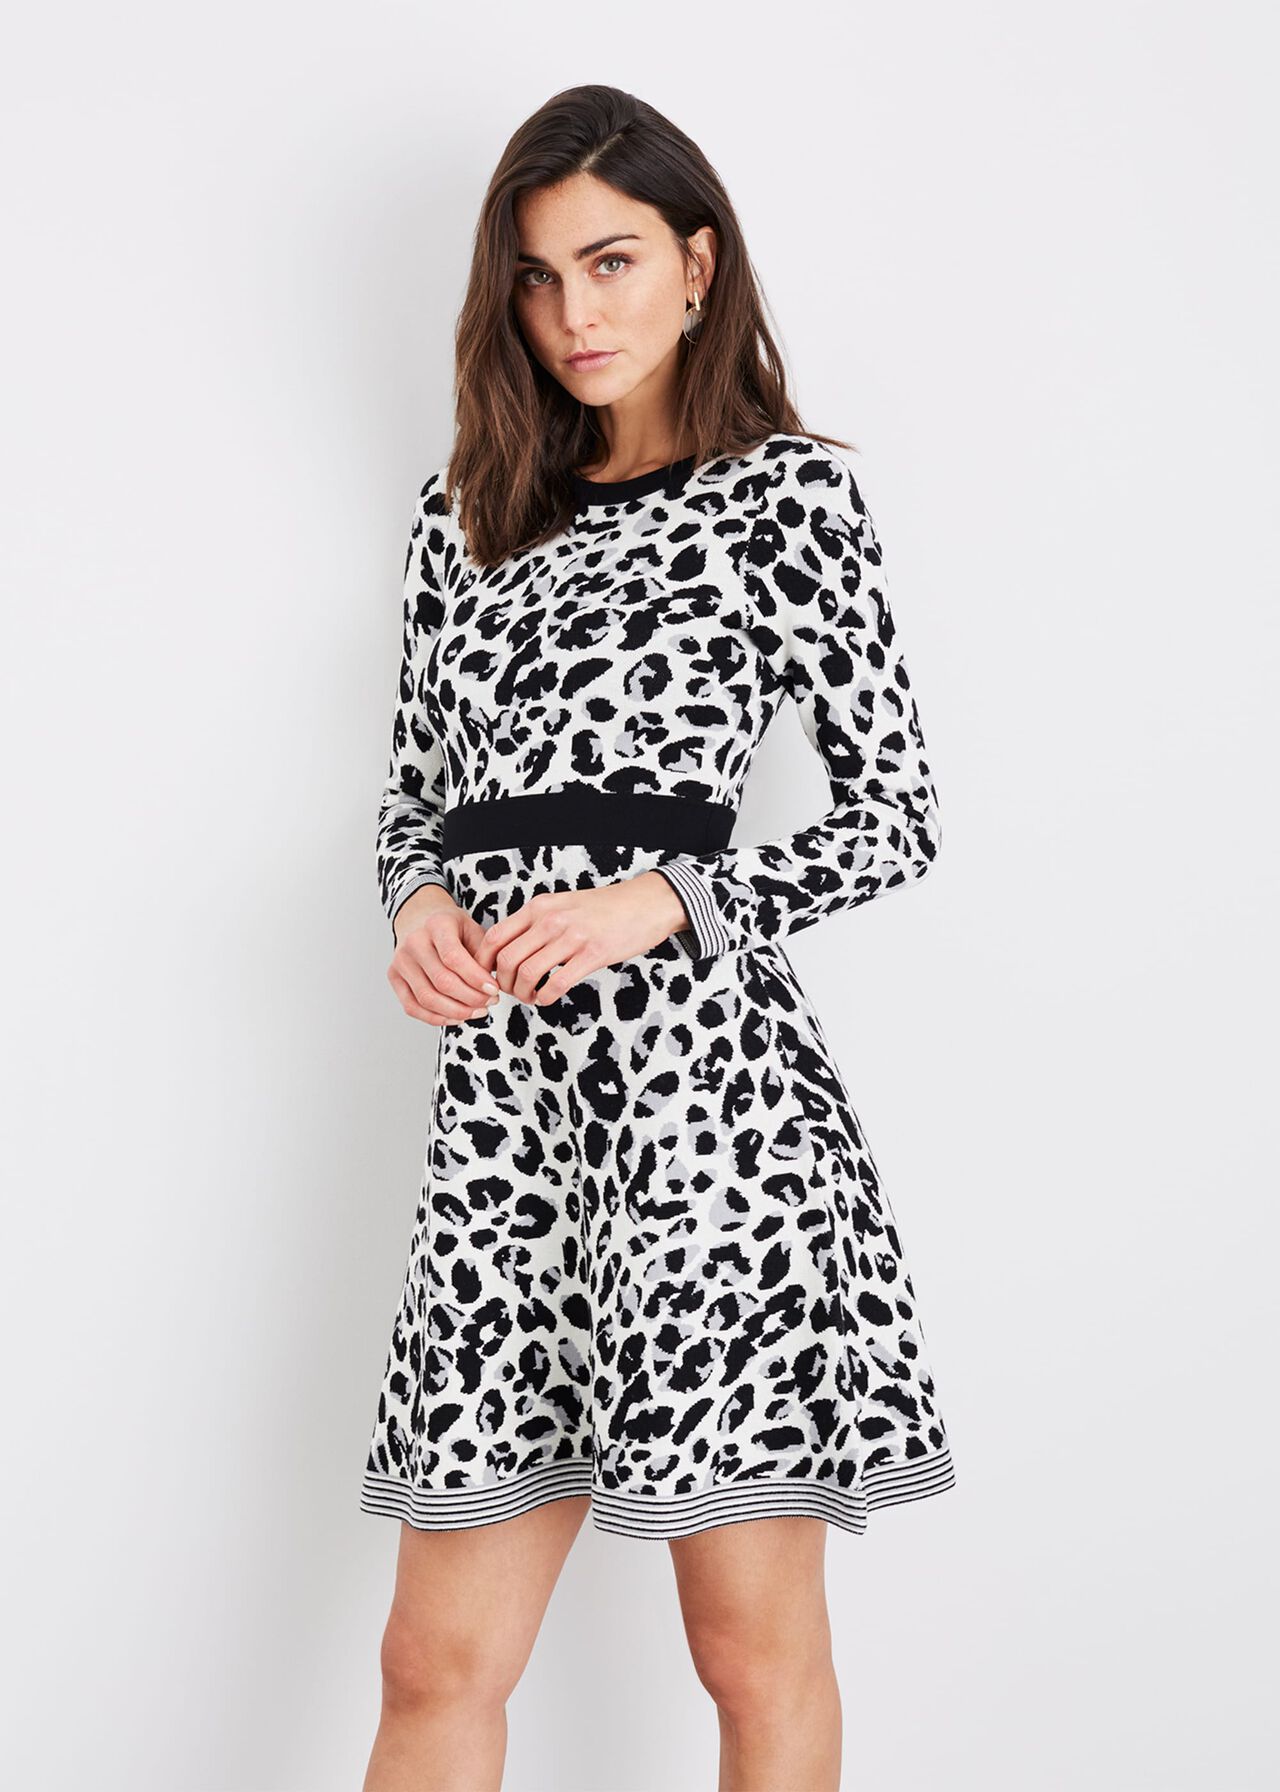 Montsuki Leopard Knit Dress